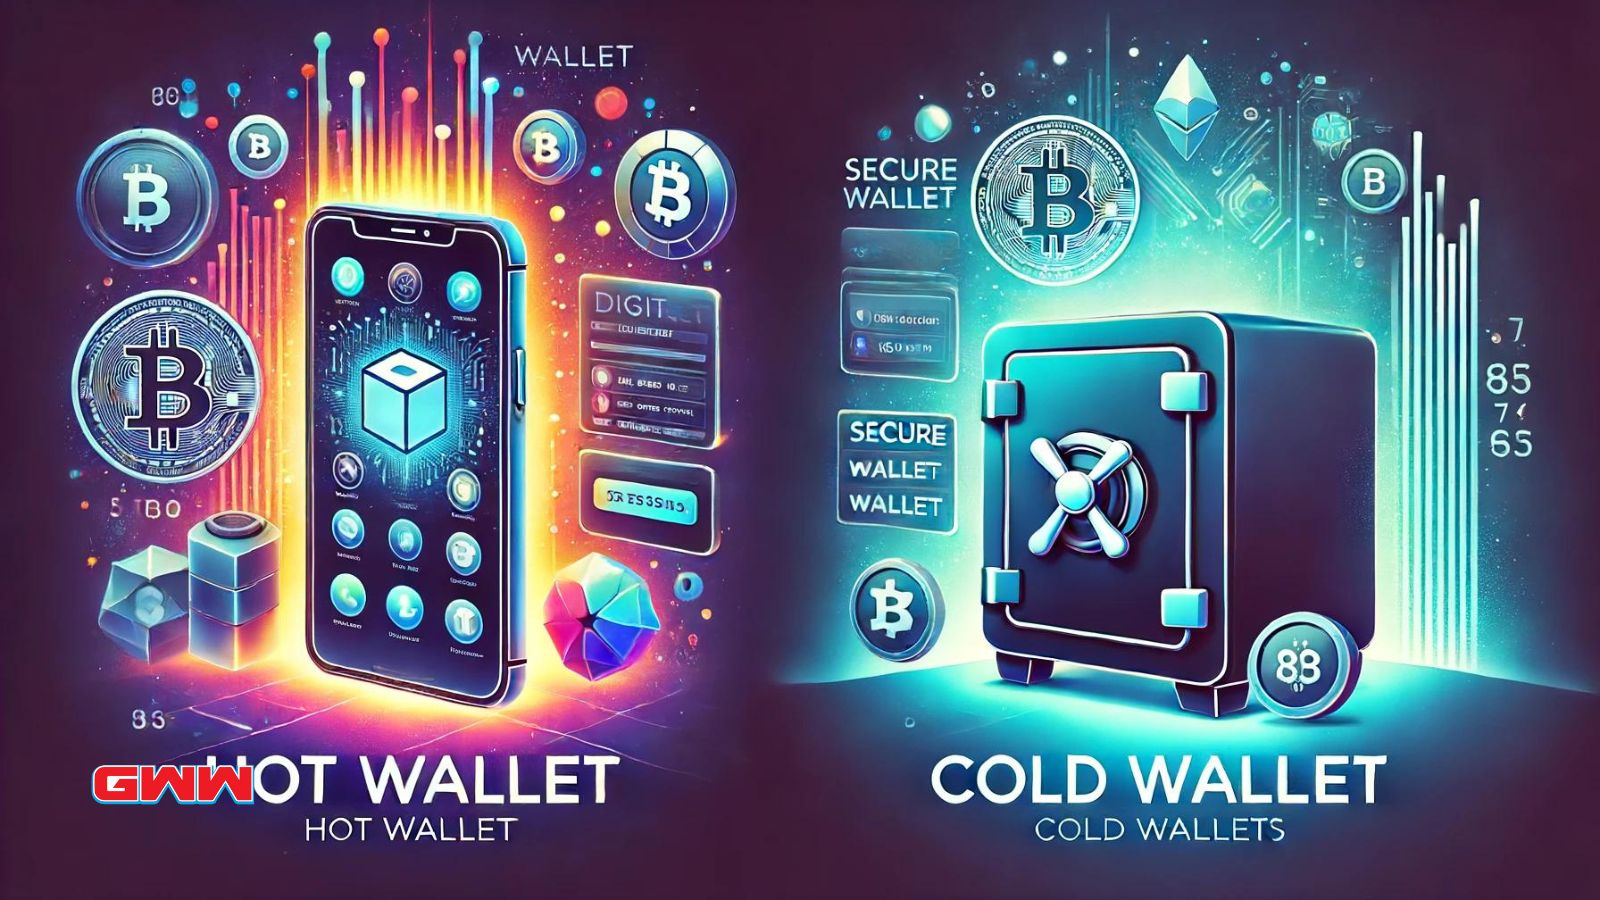 A visual representation comparing hot wallets and cold wallets.